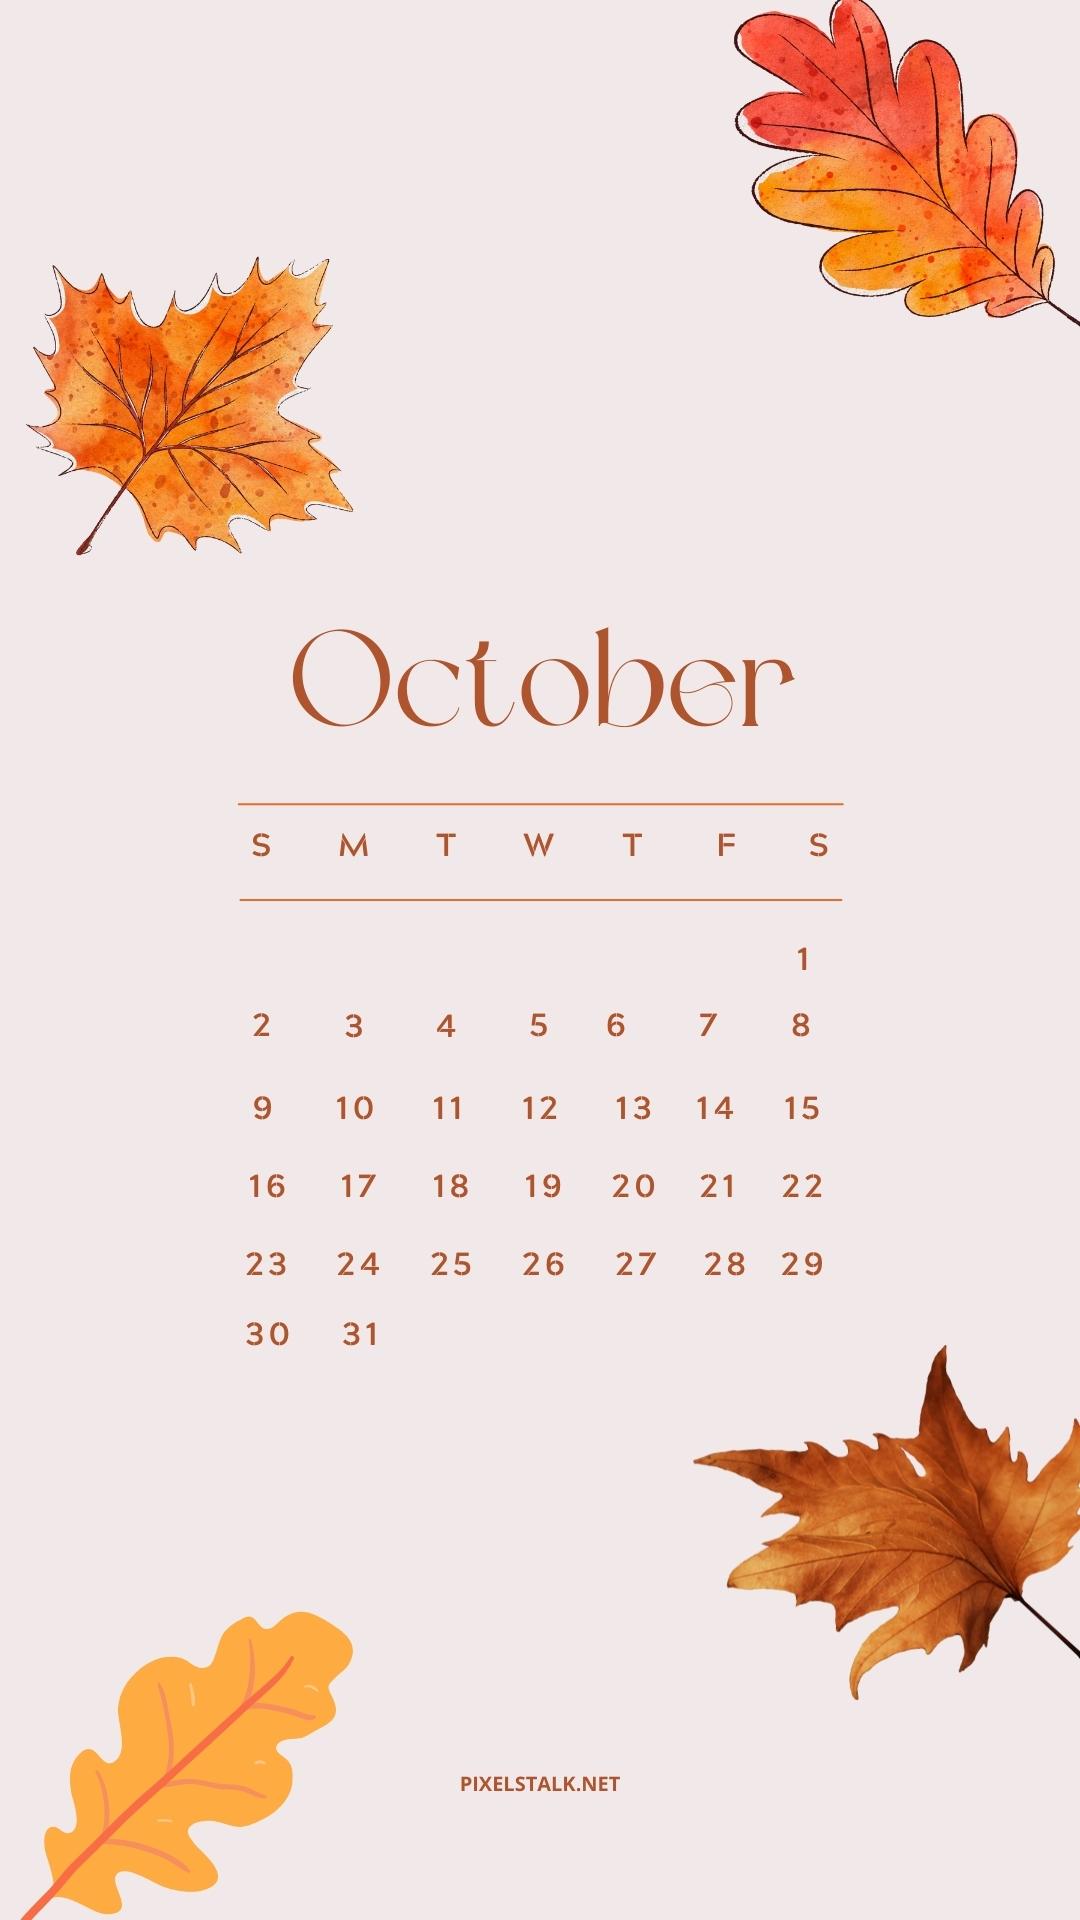 October Desktop  Mobile Wallpaper  sonrisastudiocom